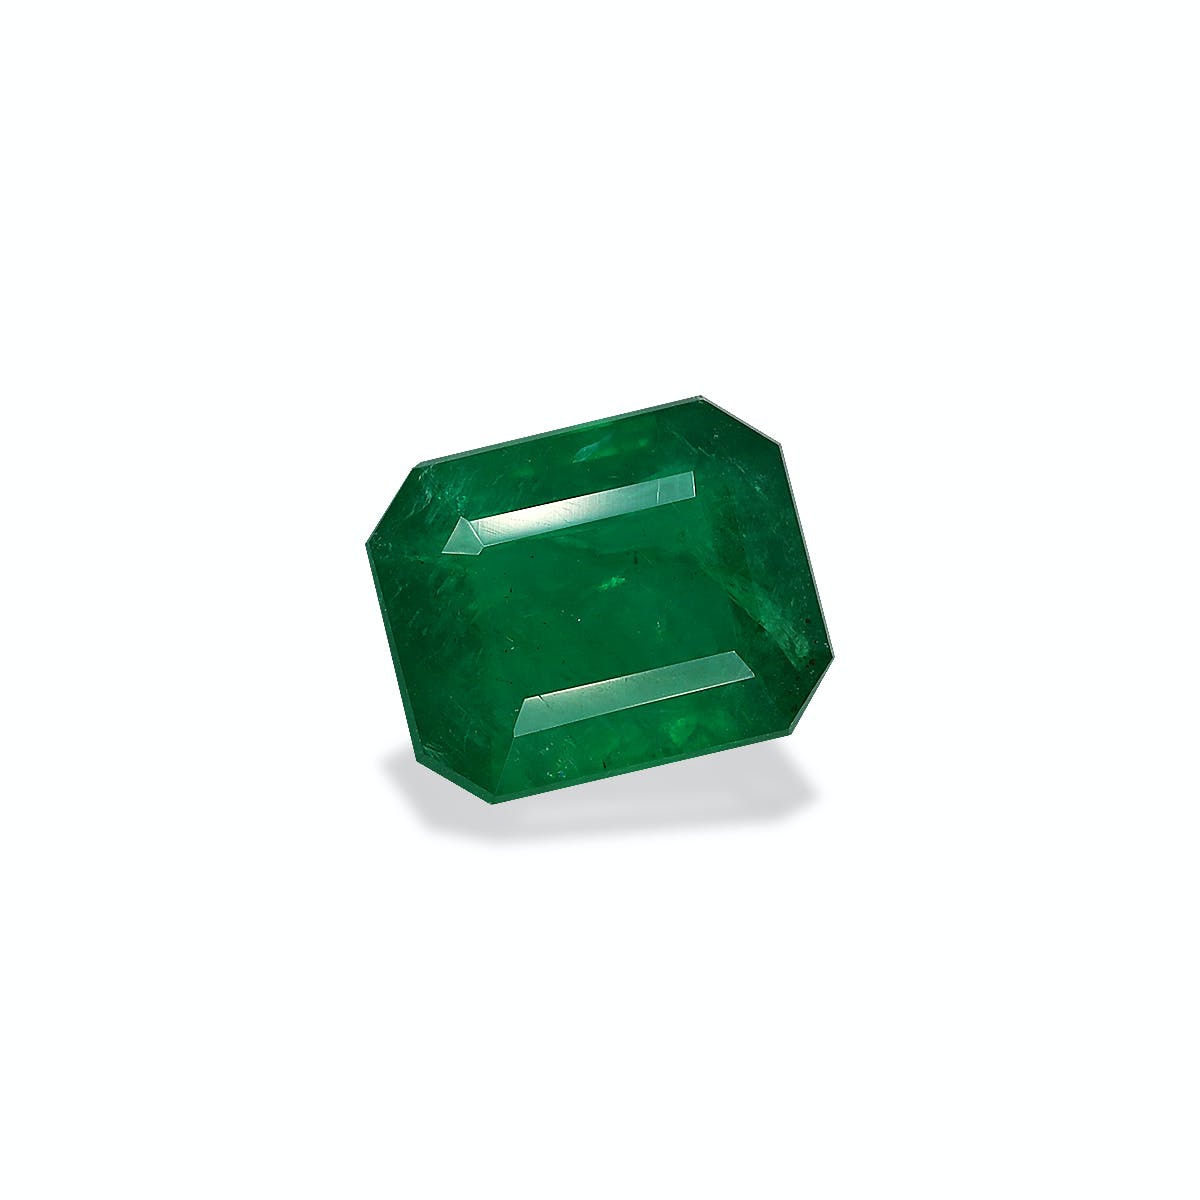 Green Zambian Emerald 2.41ct - 9x7mm (PG0452)